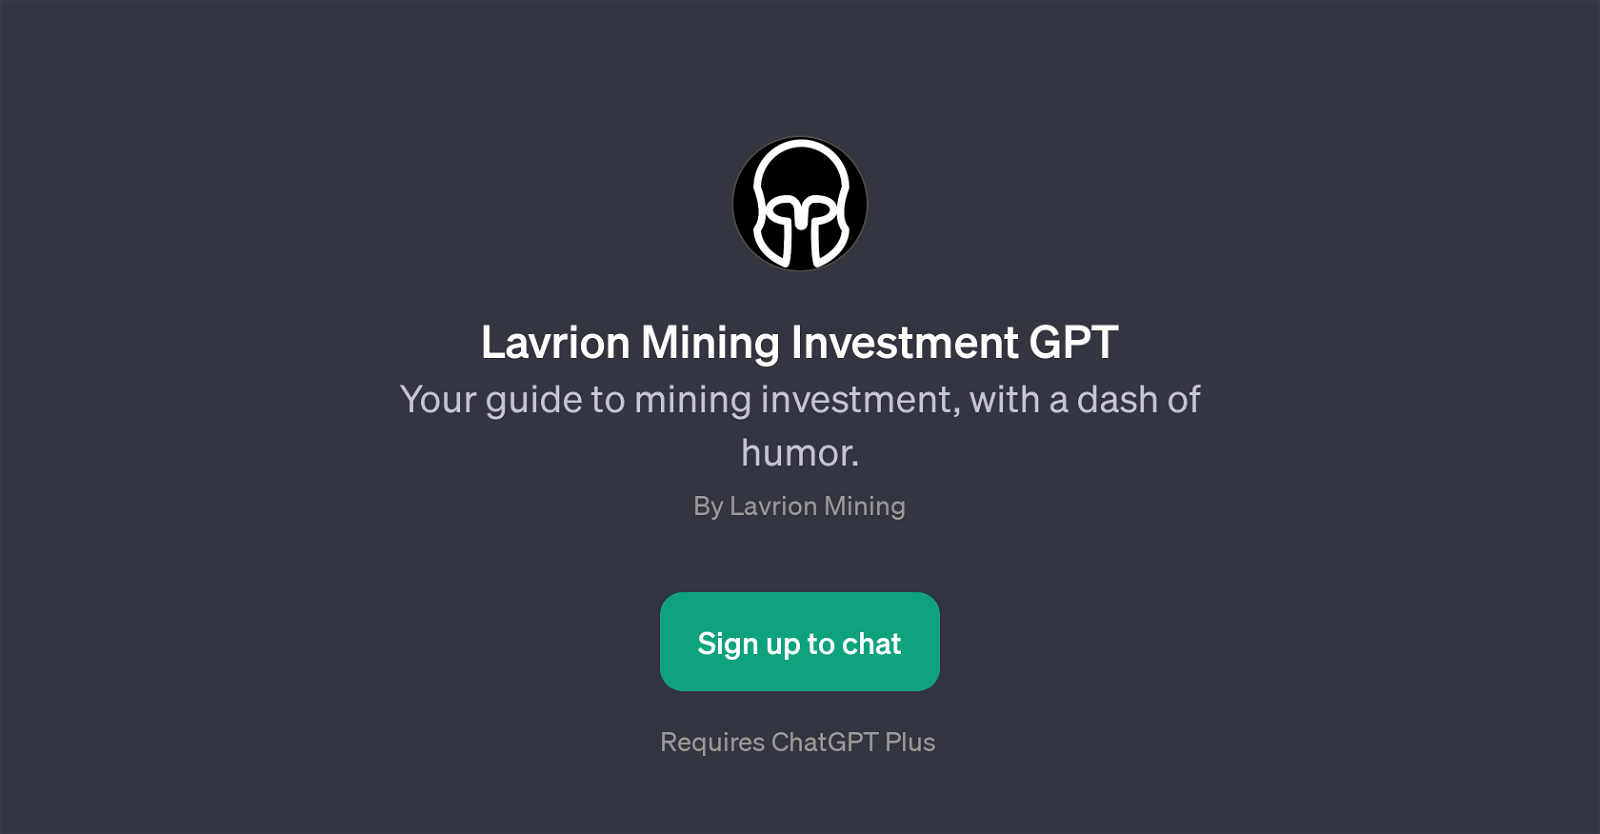 Lavrion Mining Investment GPT website